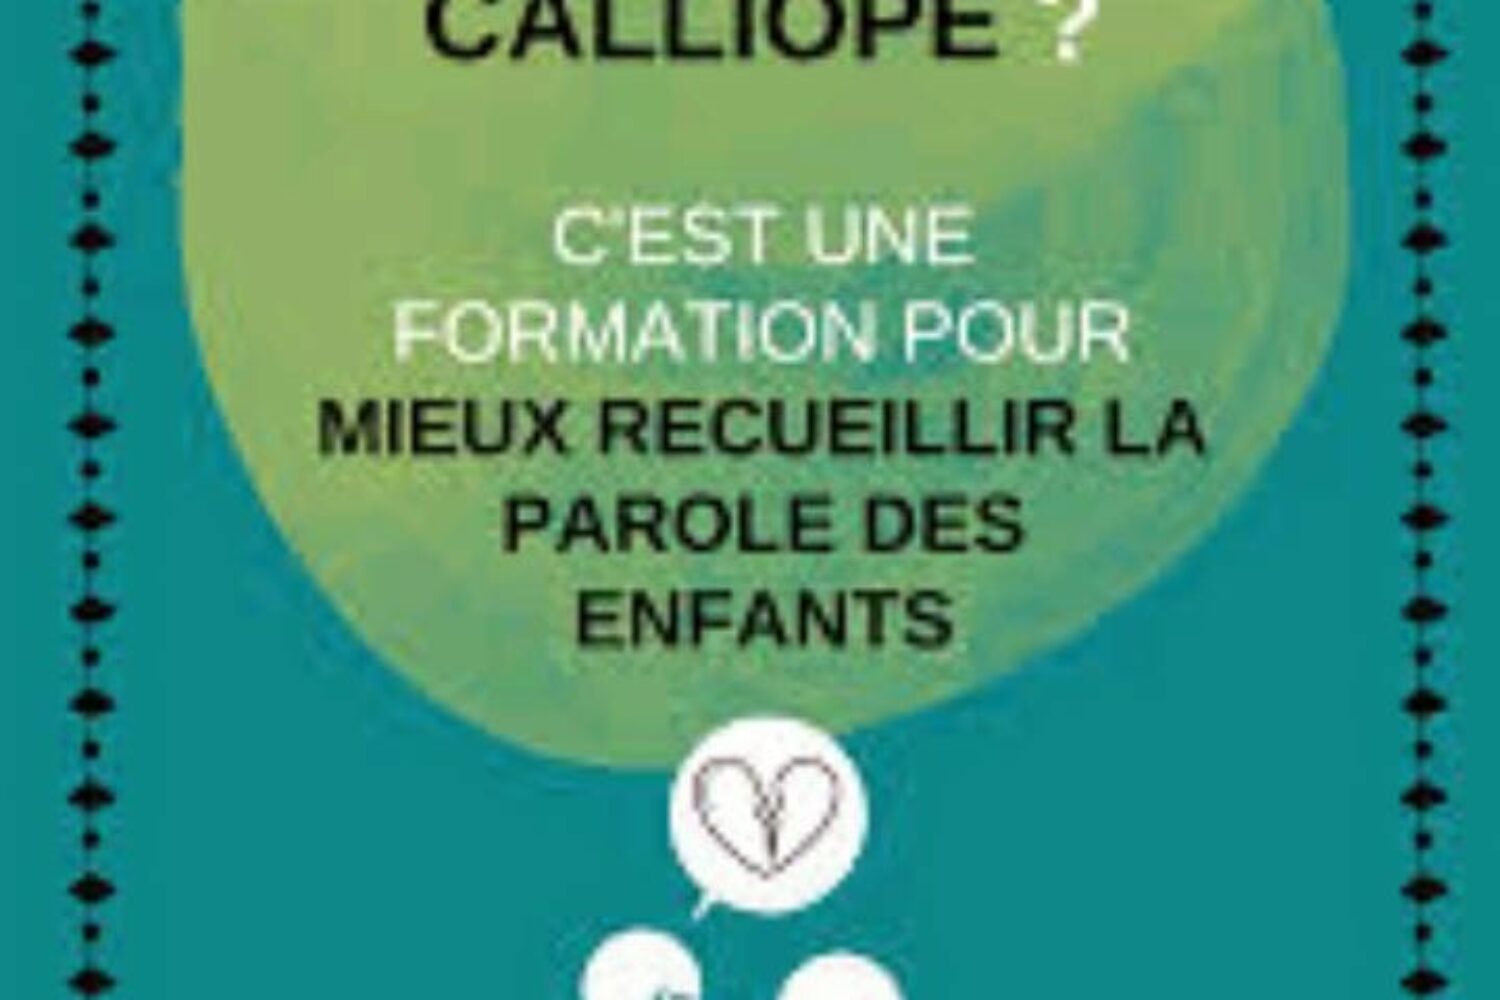 Protocole Calliope